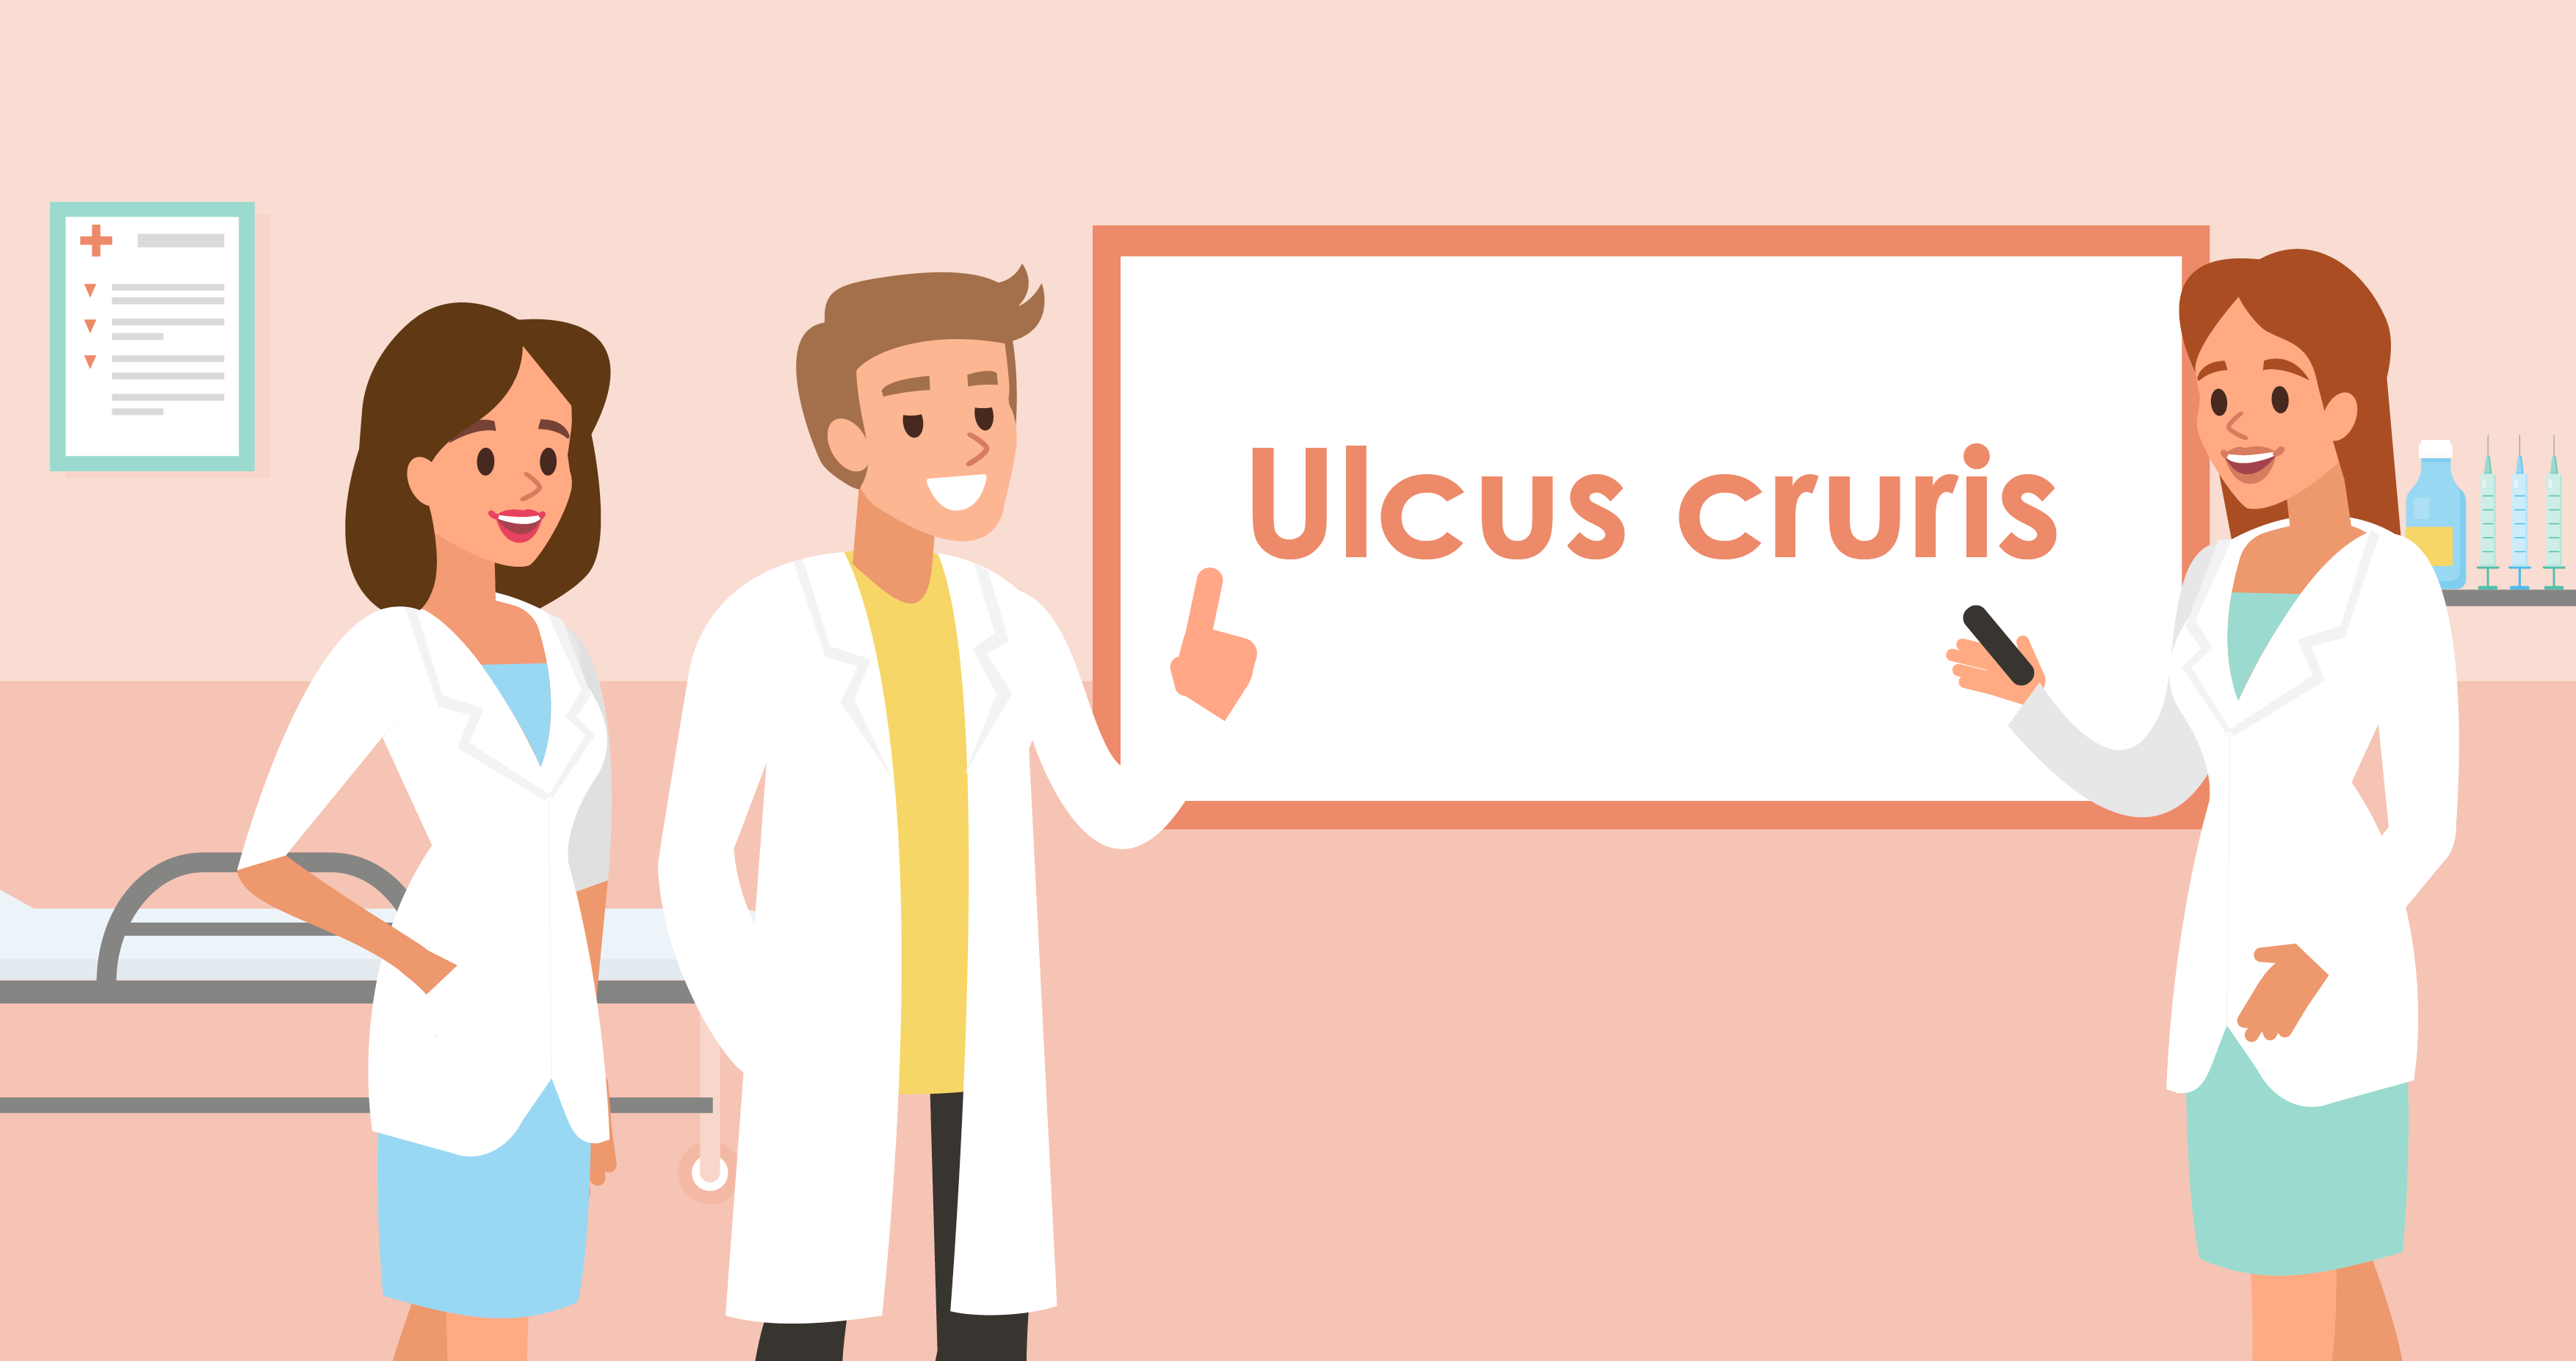 e-learning ulcus cruris wondzorg geaccrediteerd